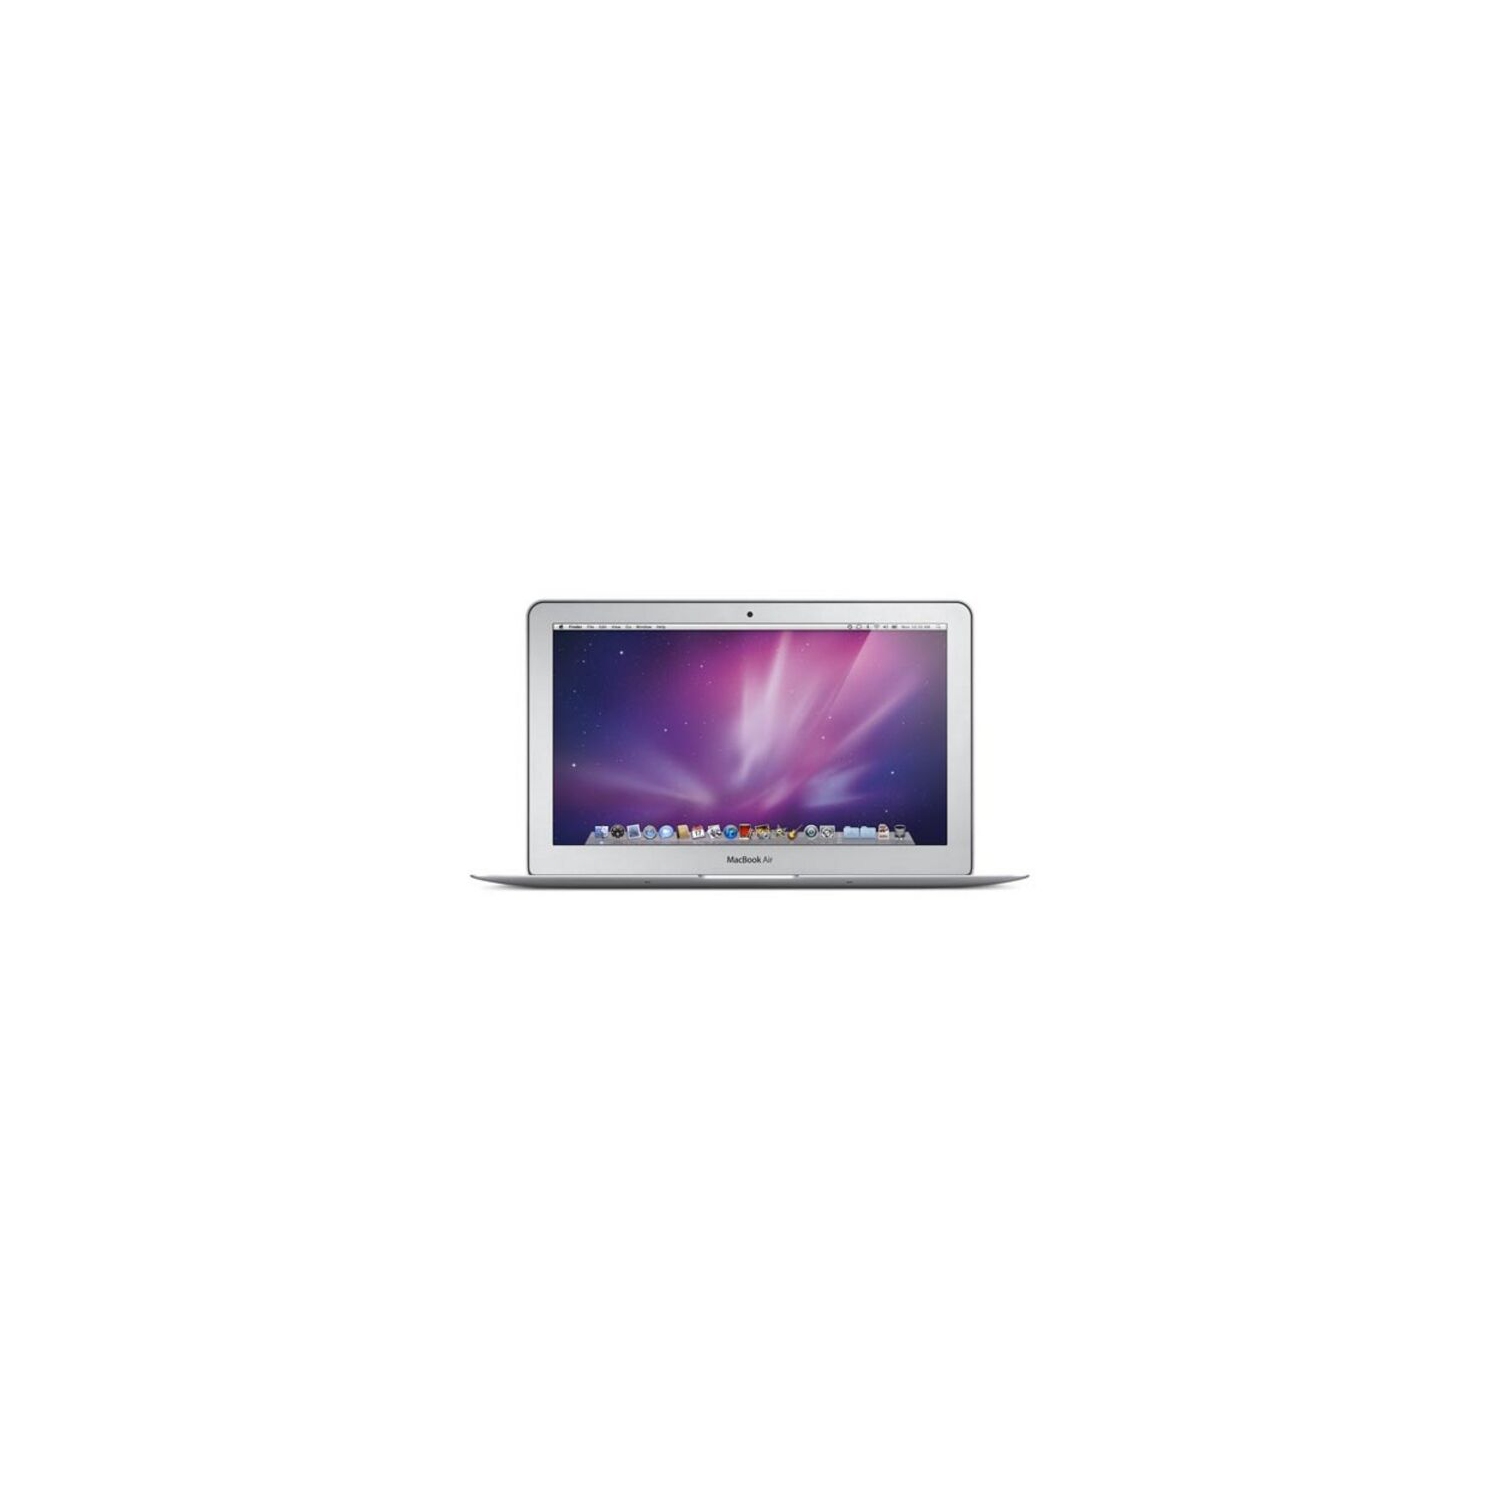 Refurbished (Good) - Apple MacBook Air 11" Laptop - Intel Core i5 (1.4GHz) / 4GB / 128GB SSD (2014 Model) - (Grade A)